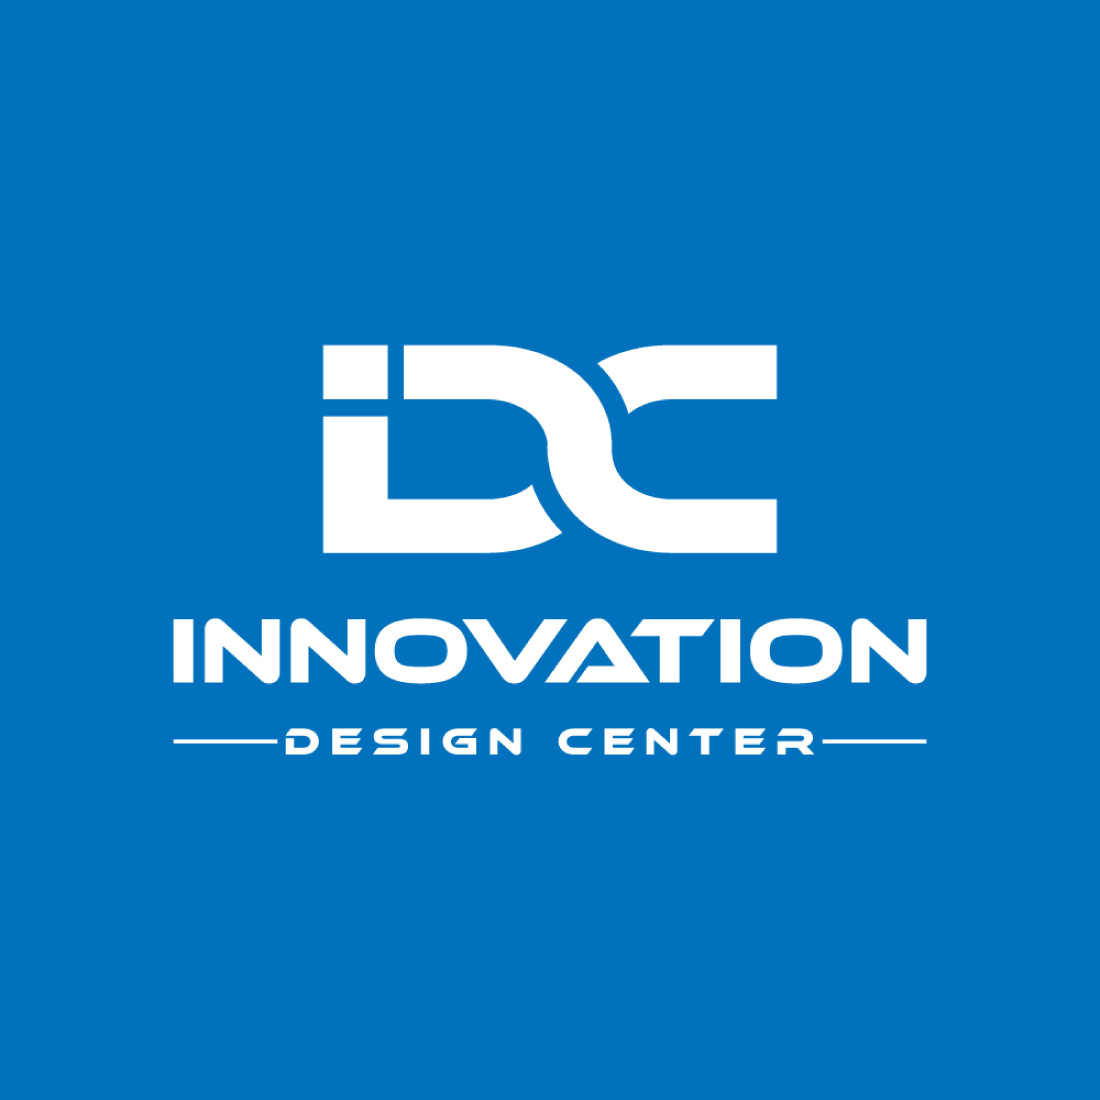 IDC logo cover image.